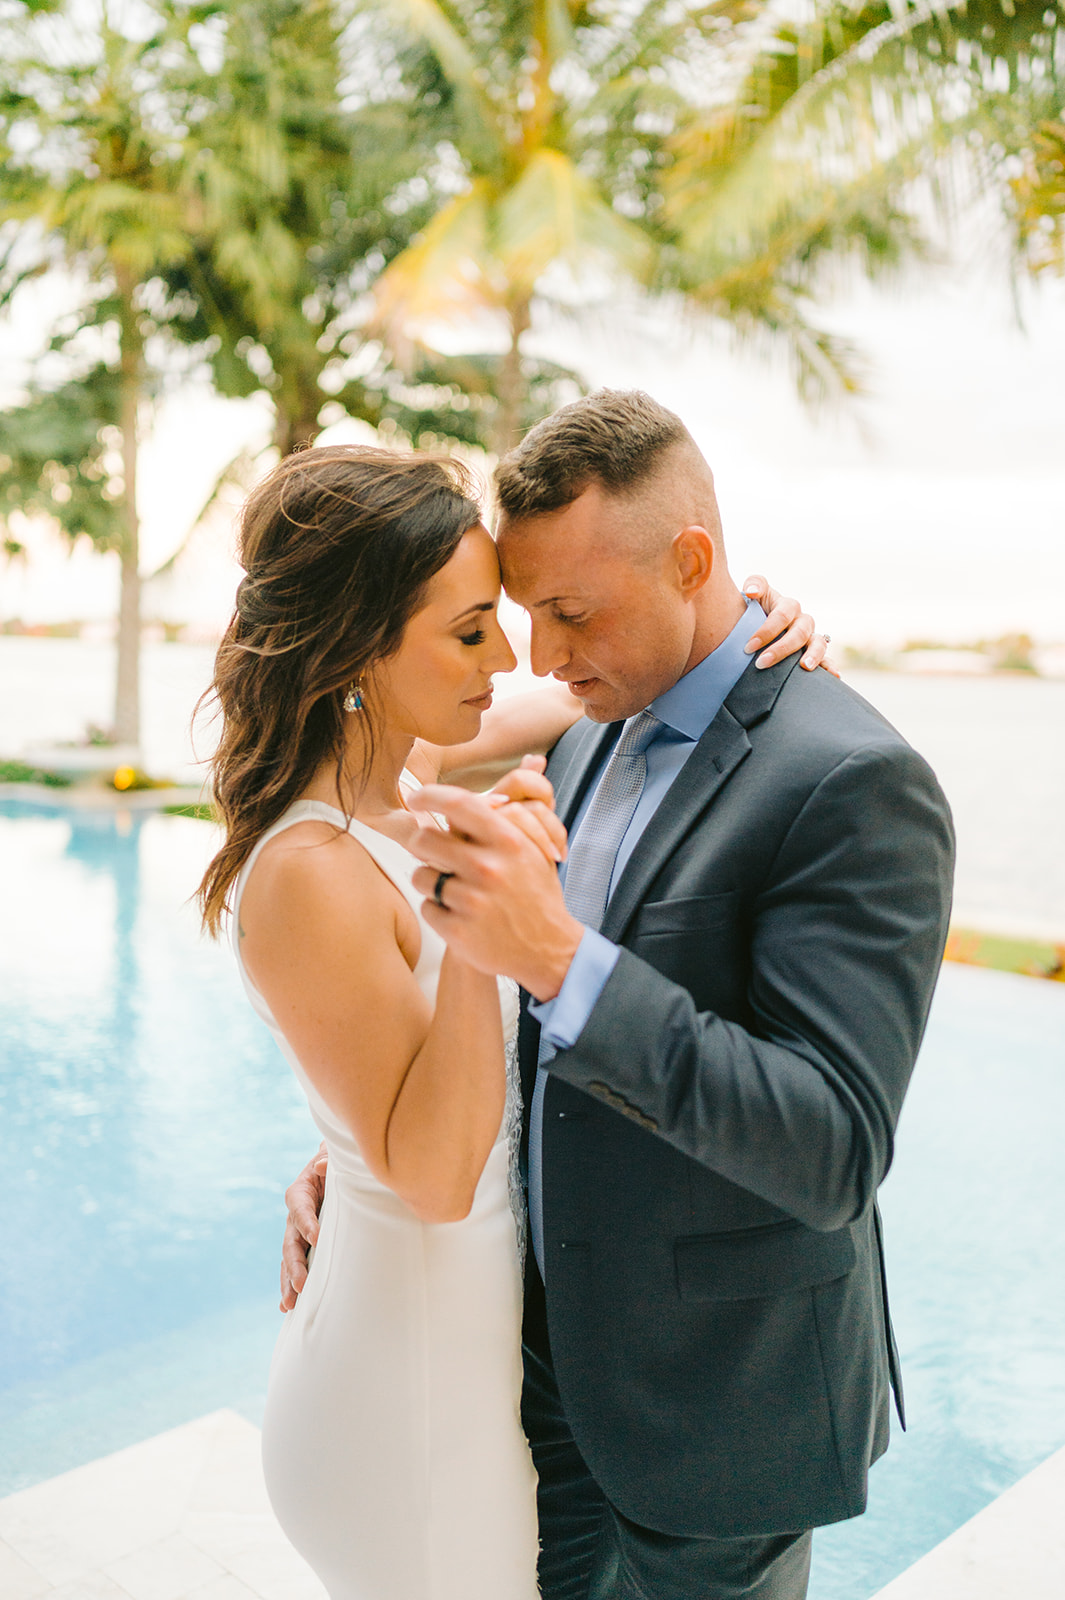 Naples Florida wedding photographer captures the exchange of vows
